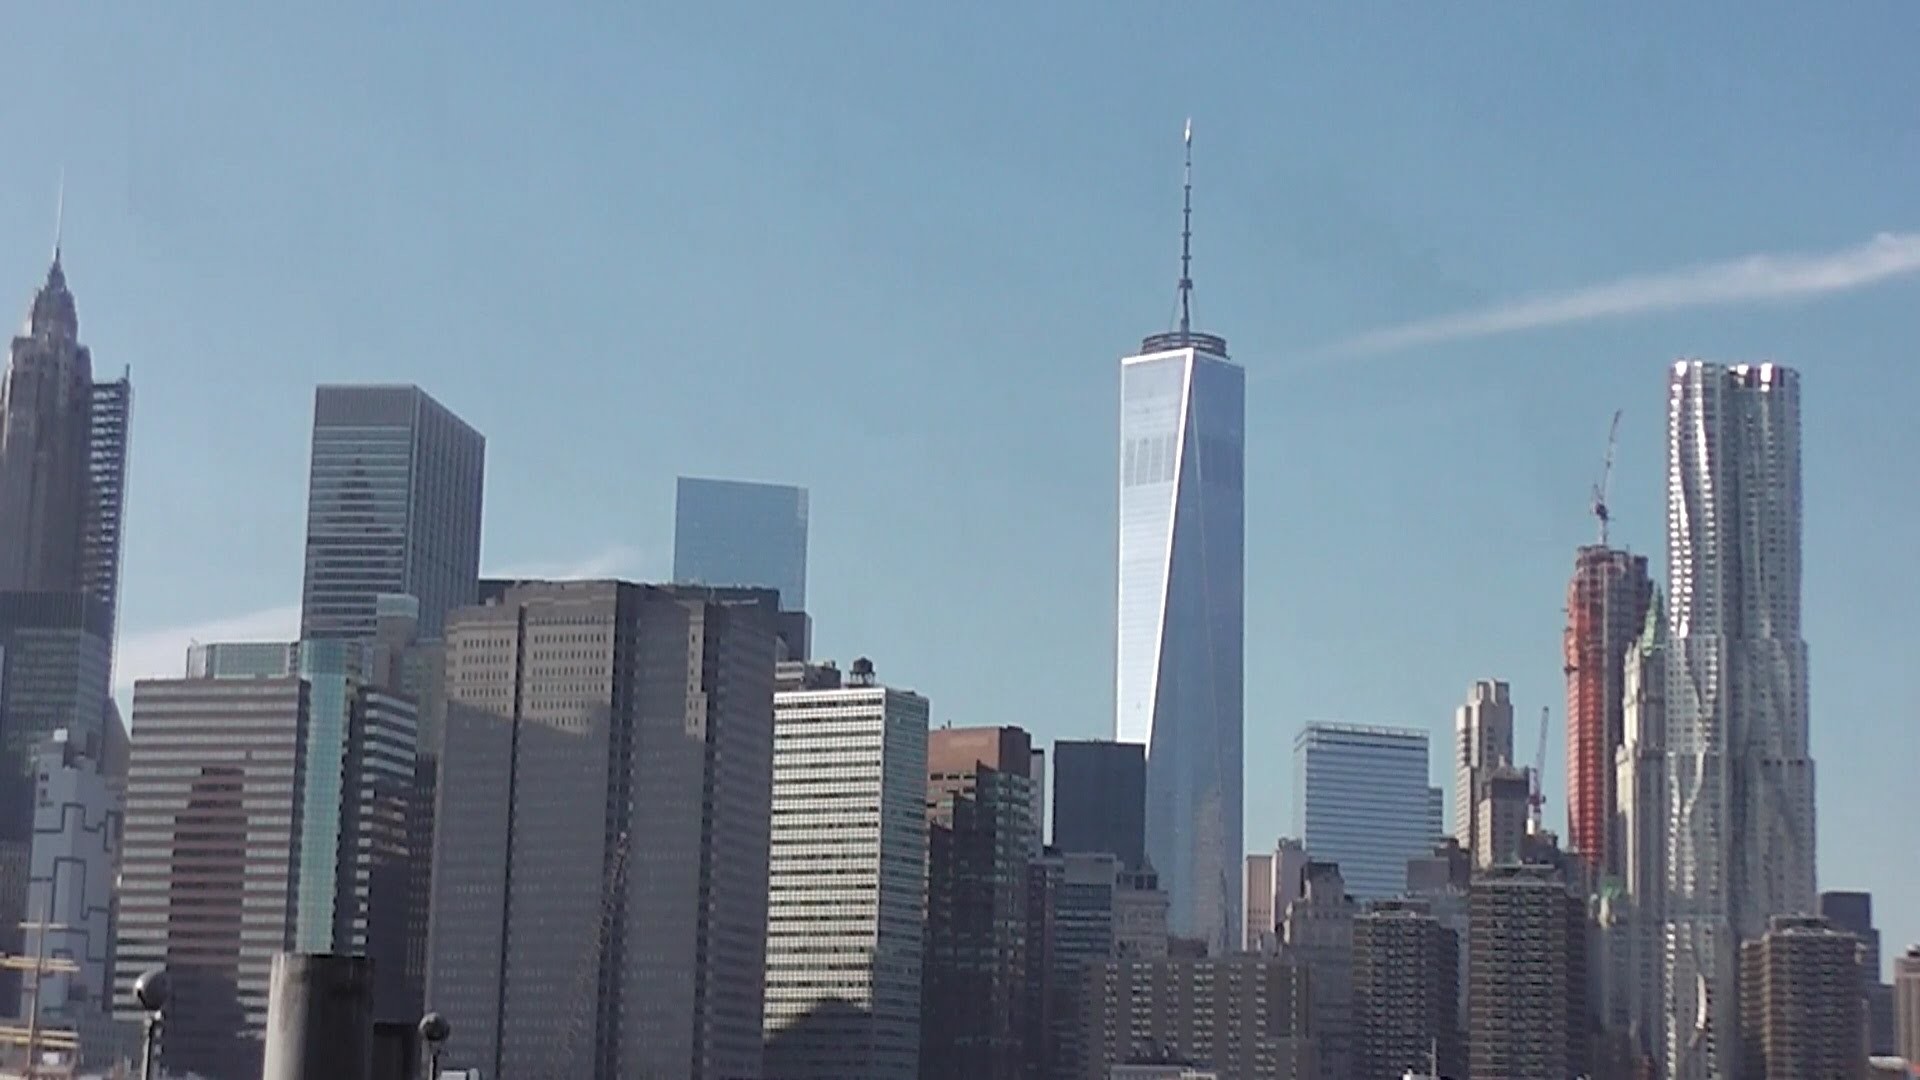 1920x1080 One World Trade Center / Freedom Tower 1/23/2015 construction progress part  4 - YouTube